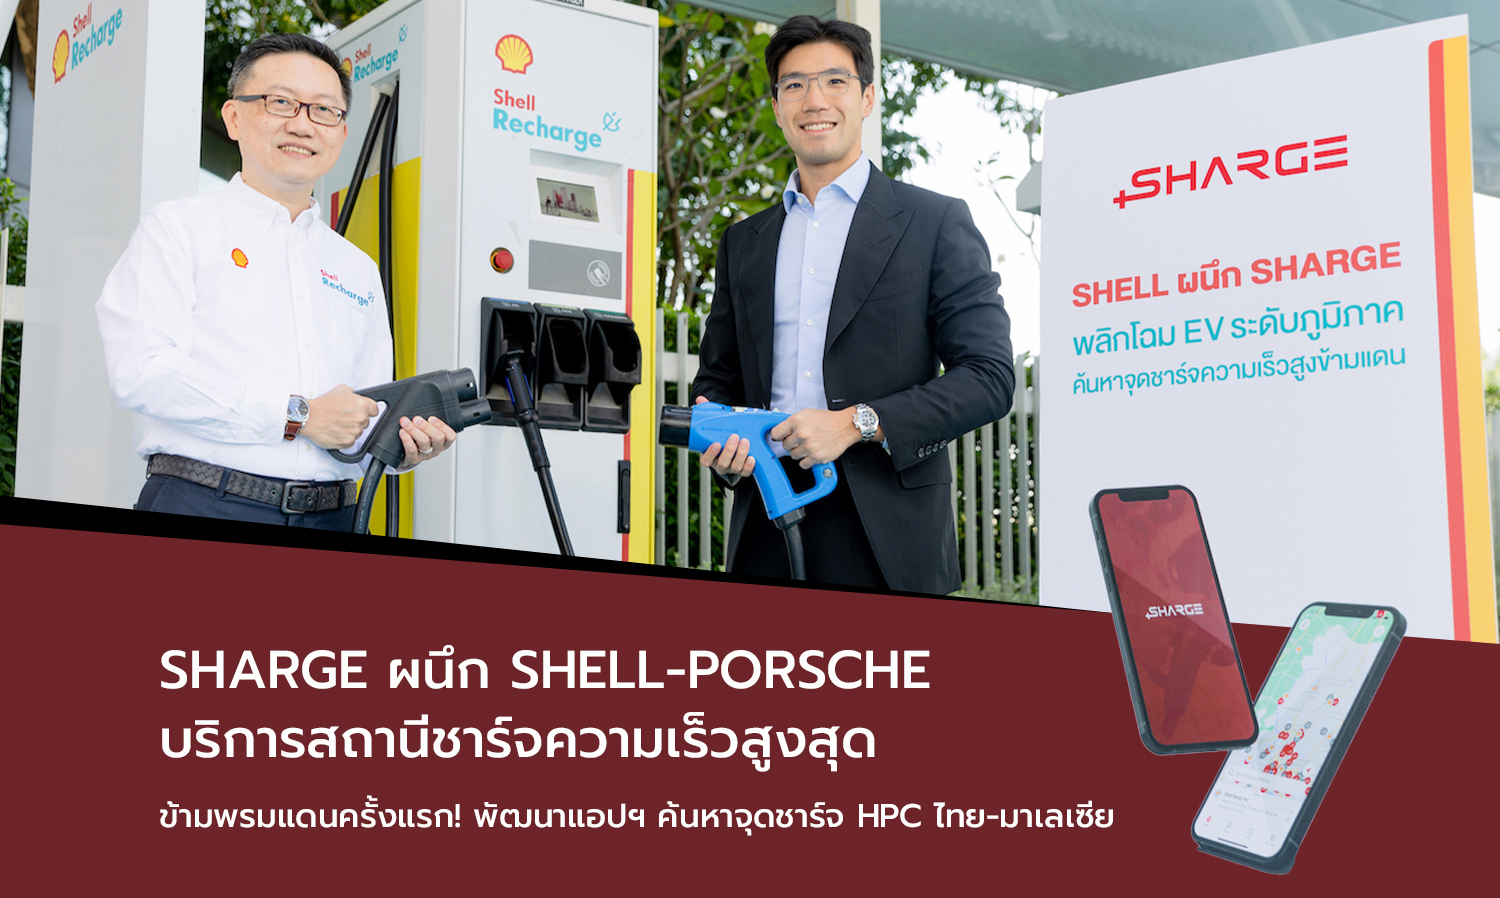 SHARGE ผนึก Shell-Porsche บริการสถานีชาร์จความเร็วสูงสุดข้ามพรมแดนครั้งแรก! พัฒนาแอปฯ ค้นหาจุดชาร์จ HPC ไทย-มาเลเซีย 